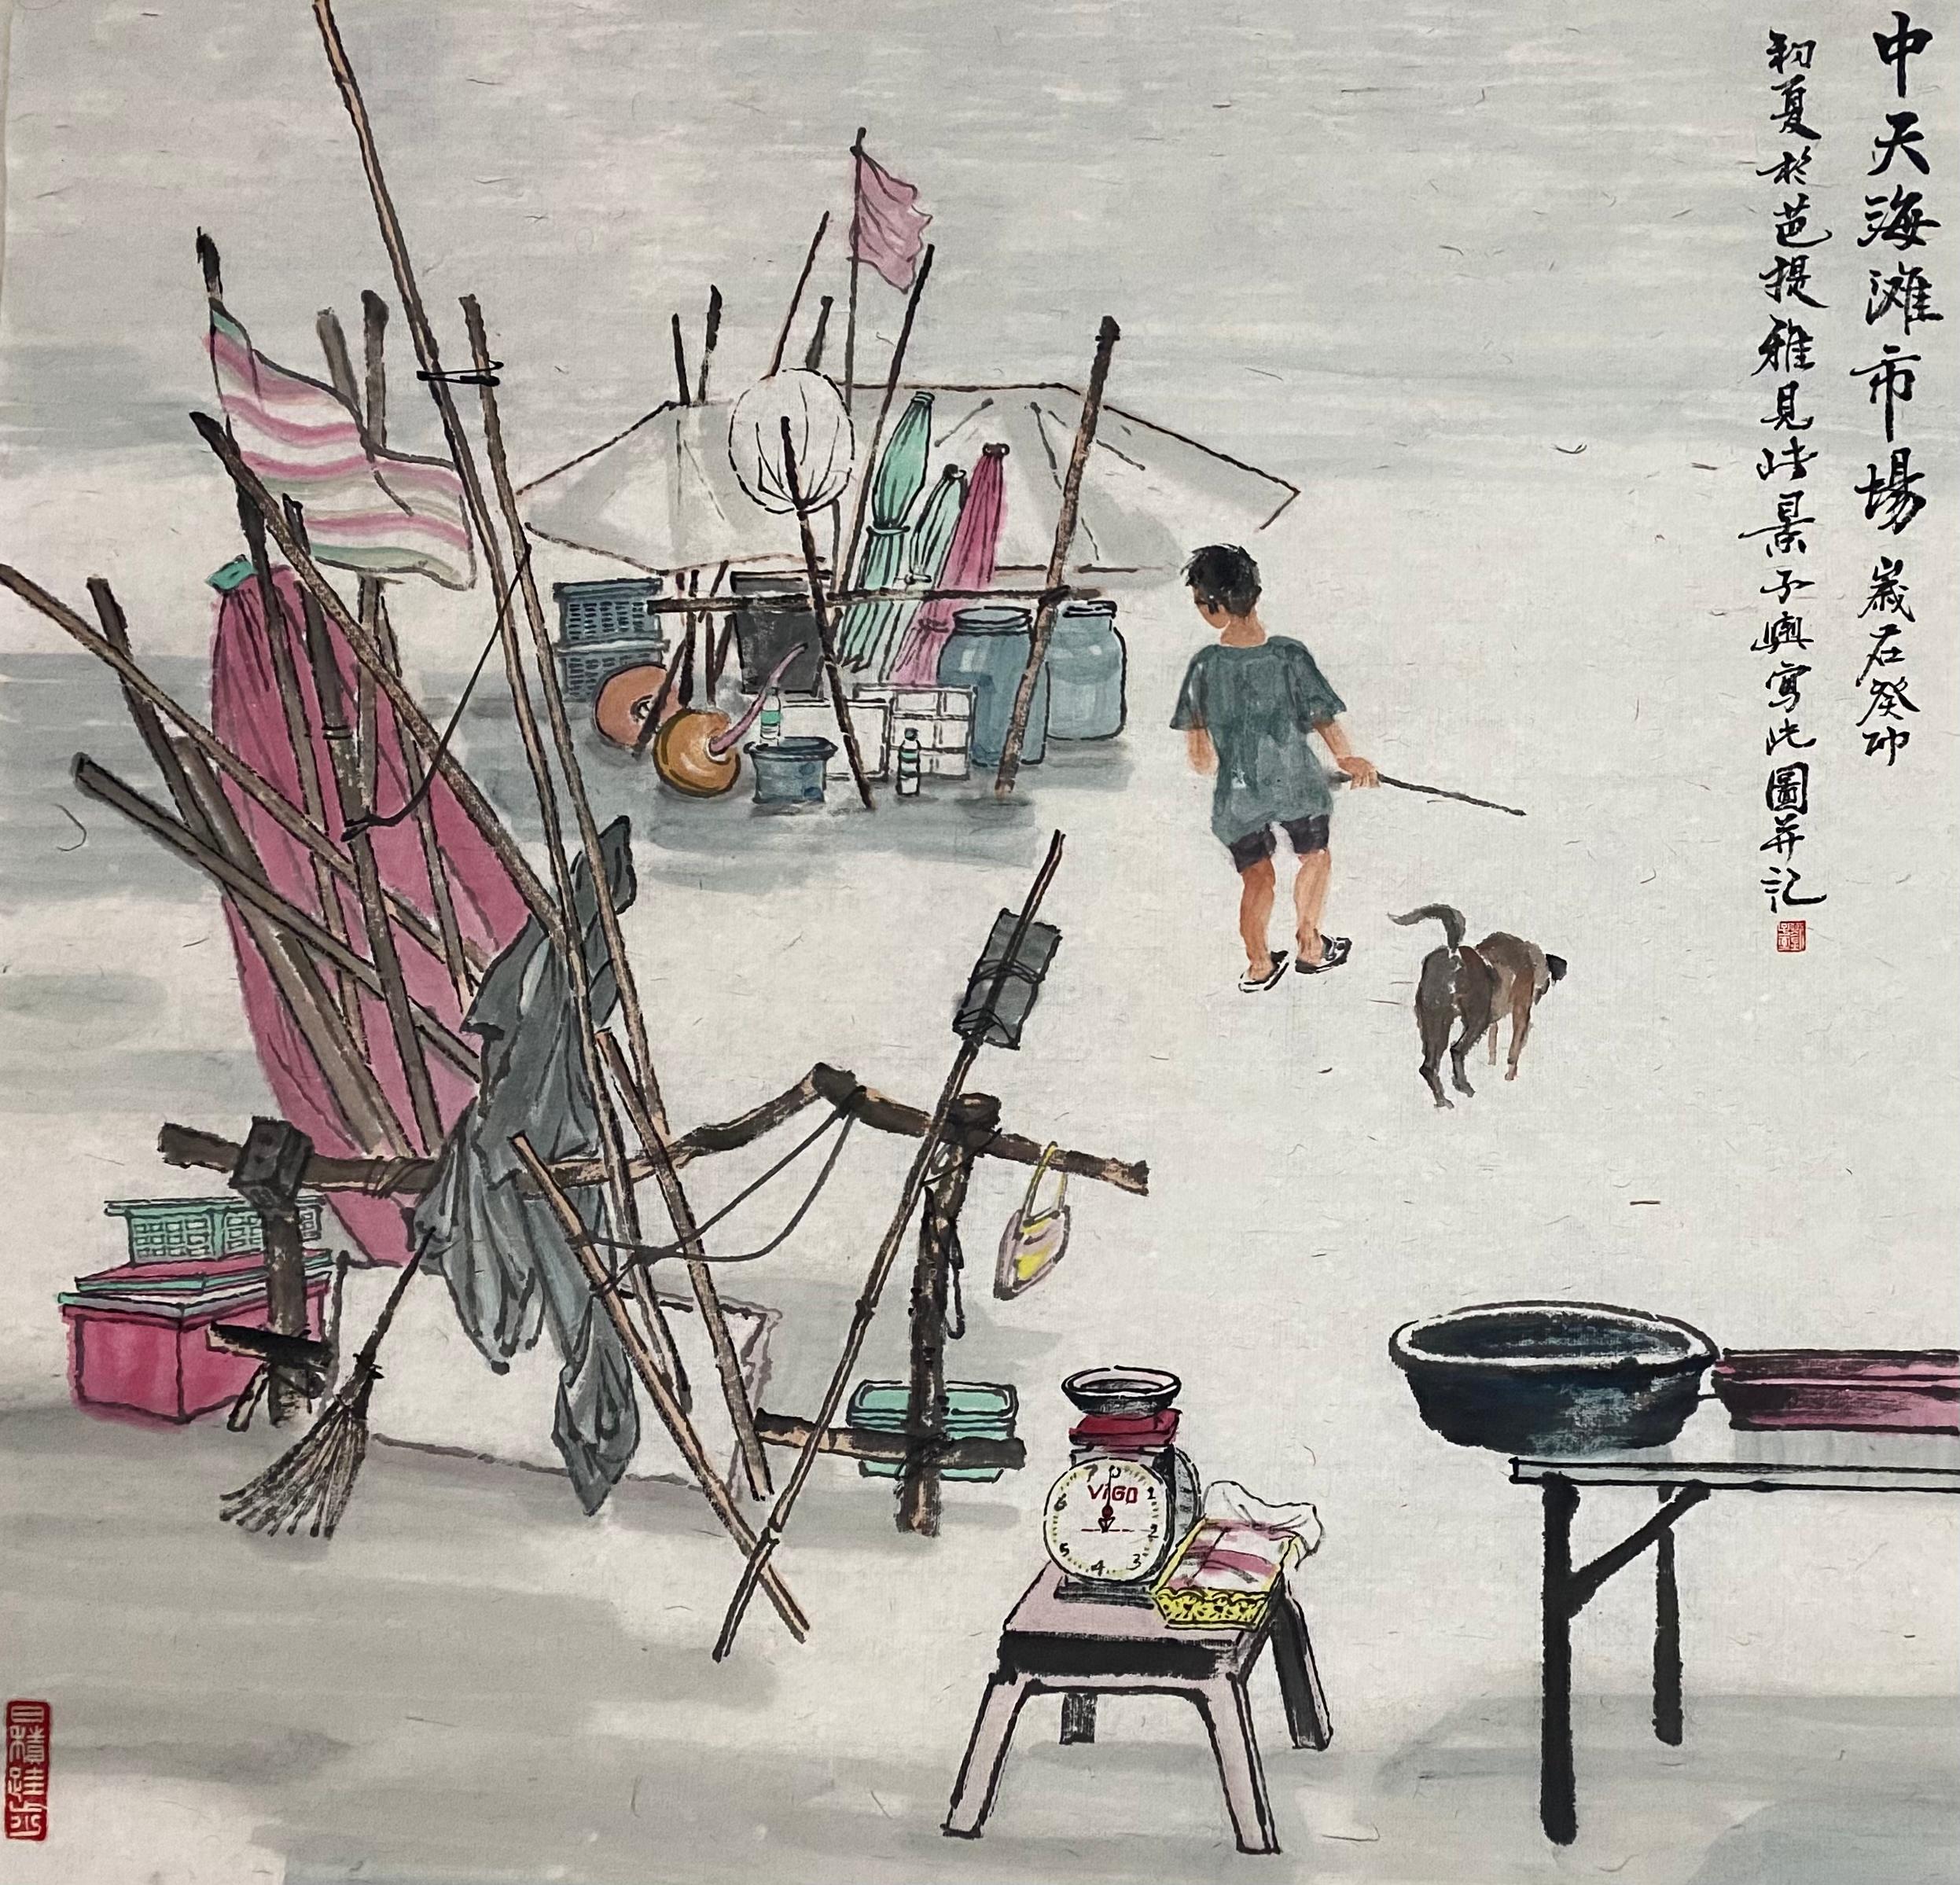 Chinese Contemporary Art by Liu Ziyu - Market by the Sea